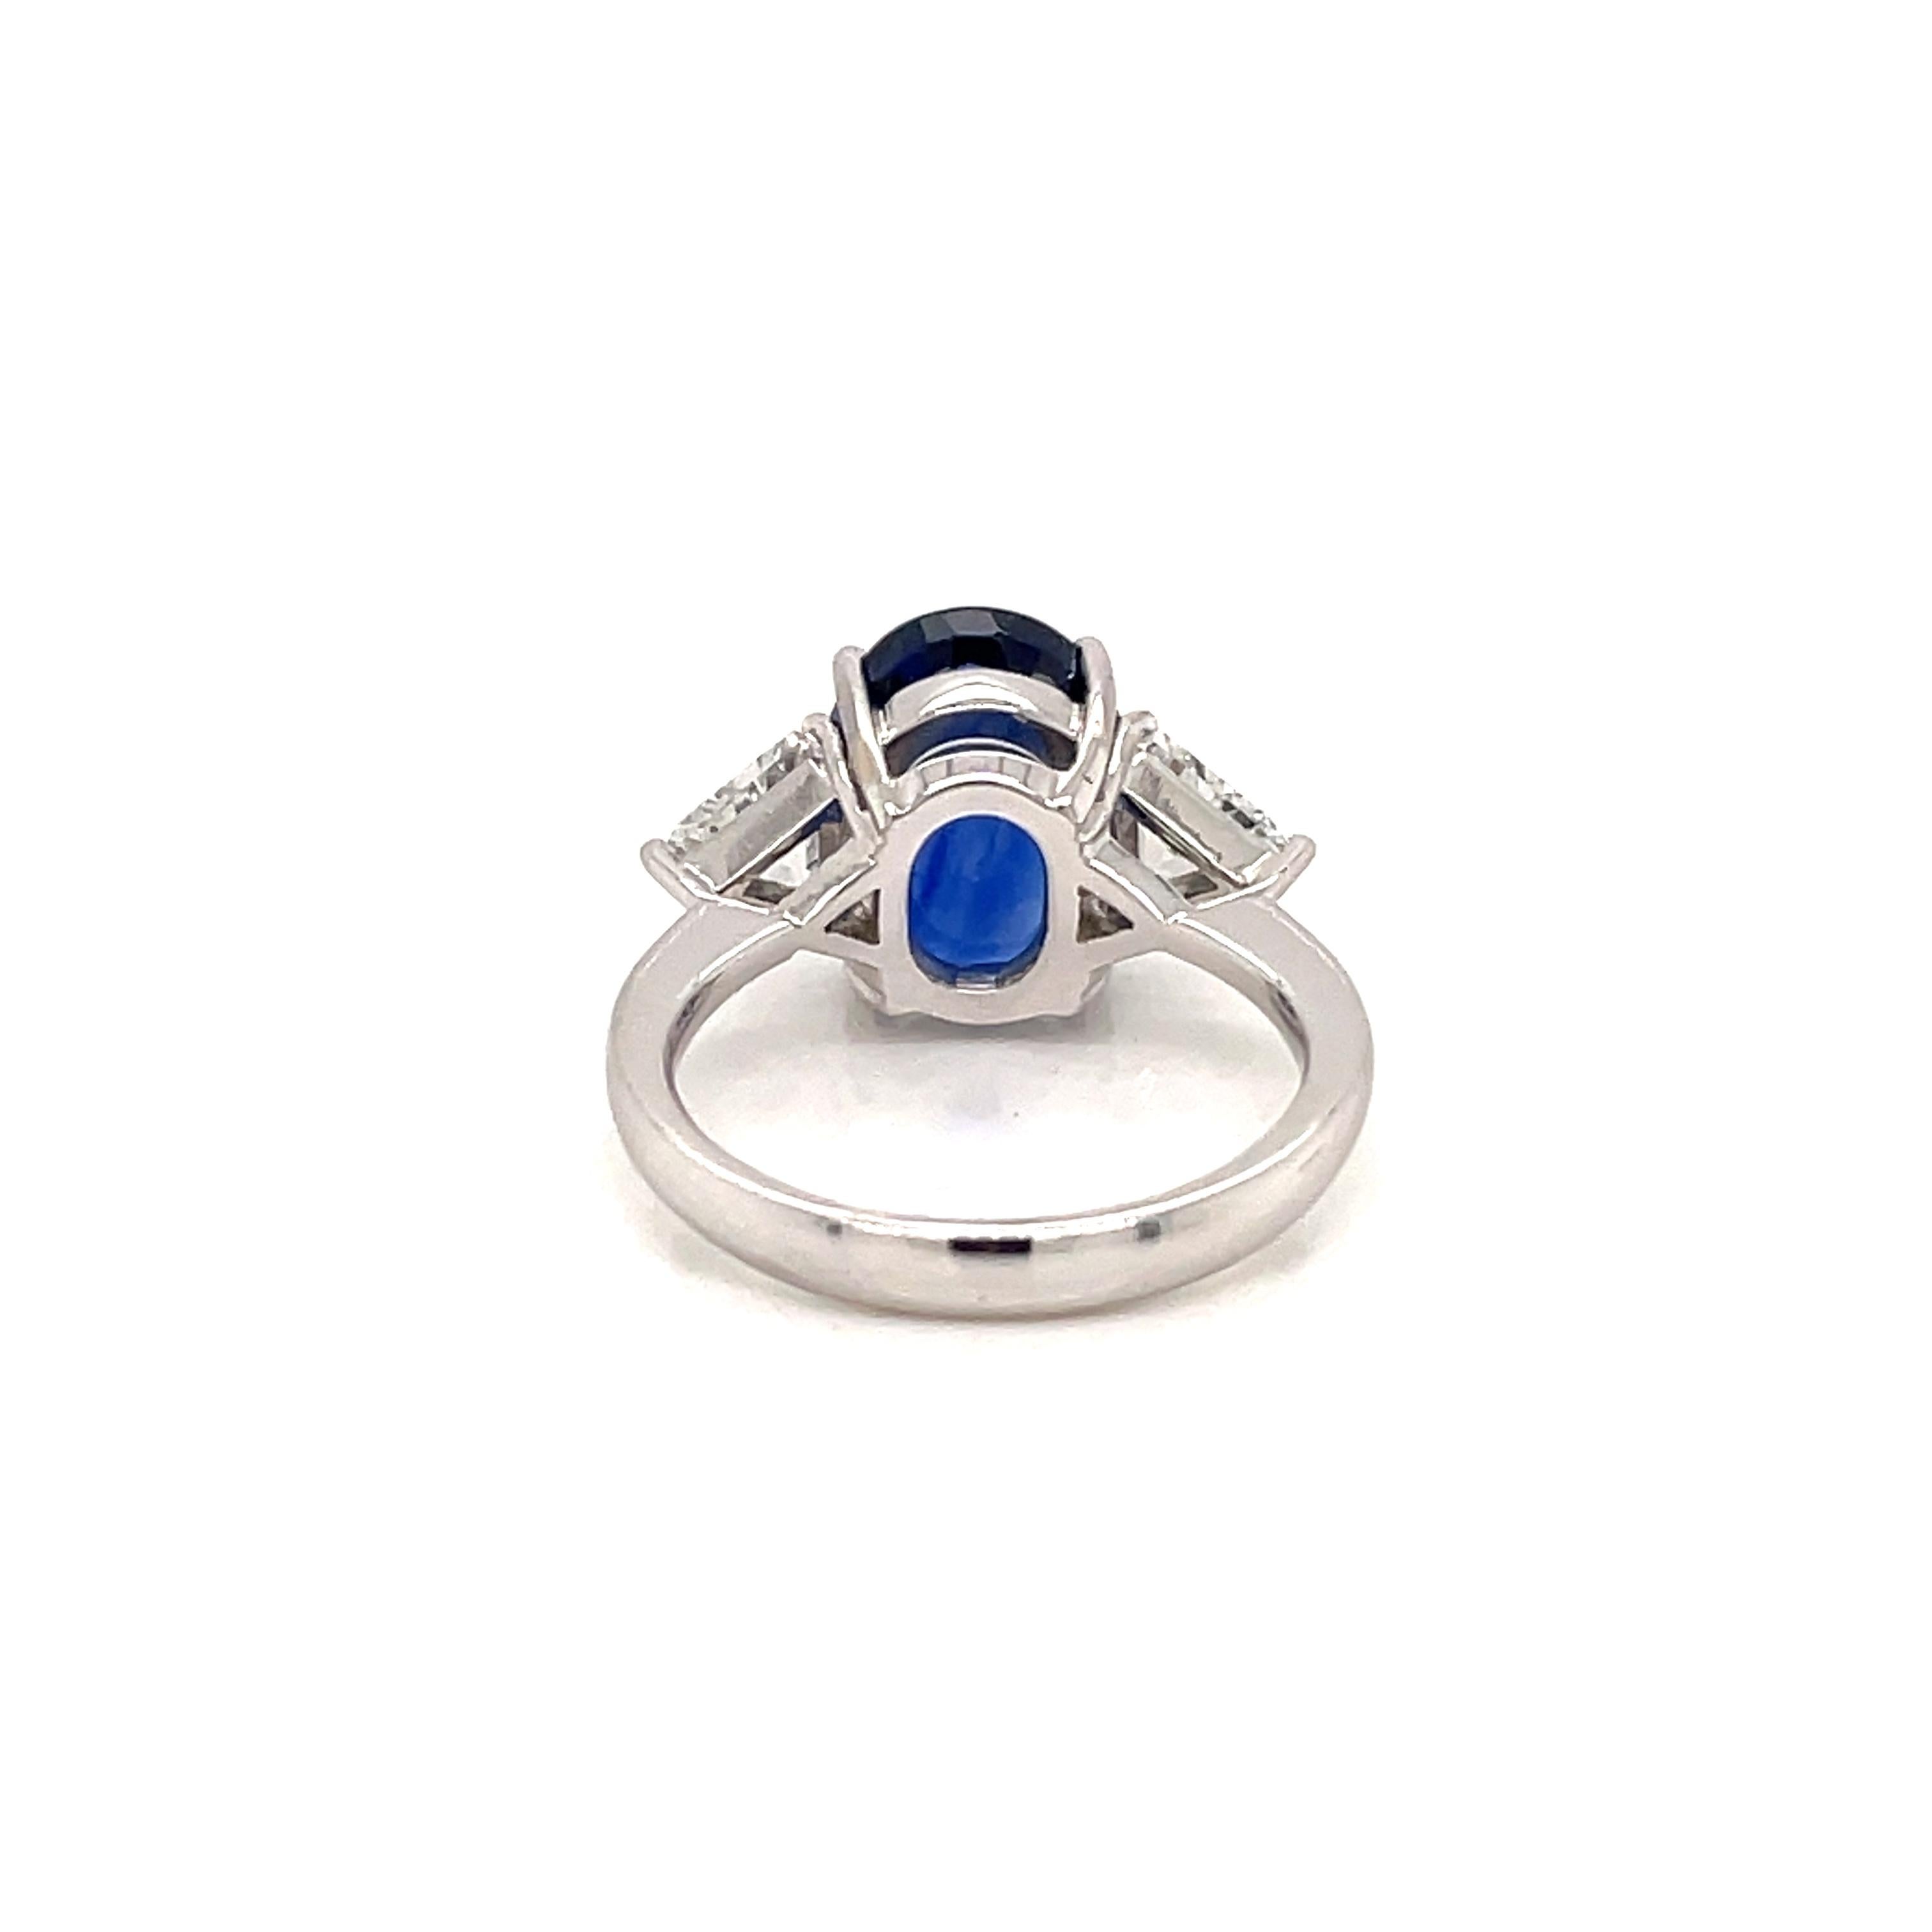 Vintage Certified 6 Carat Unheated Burma Sapphire Diamond Engagement Ring 6